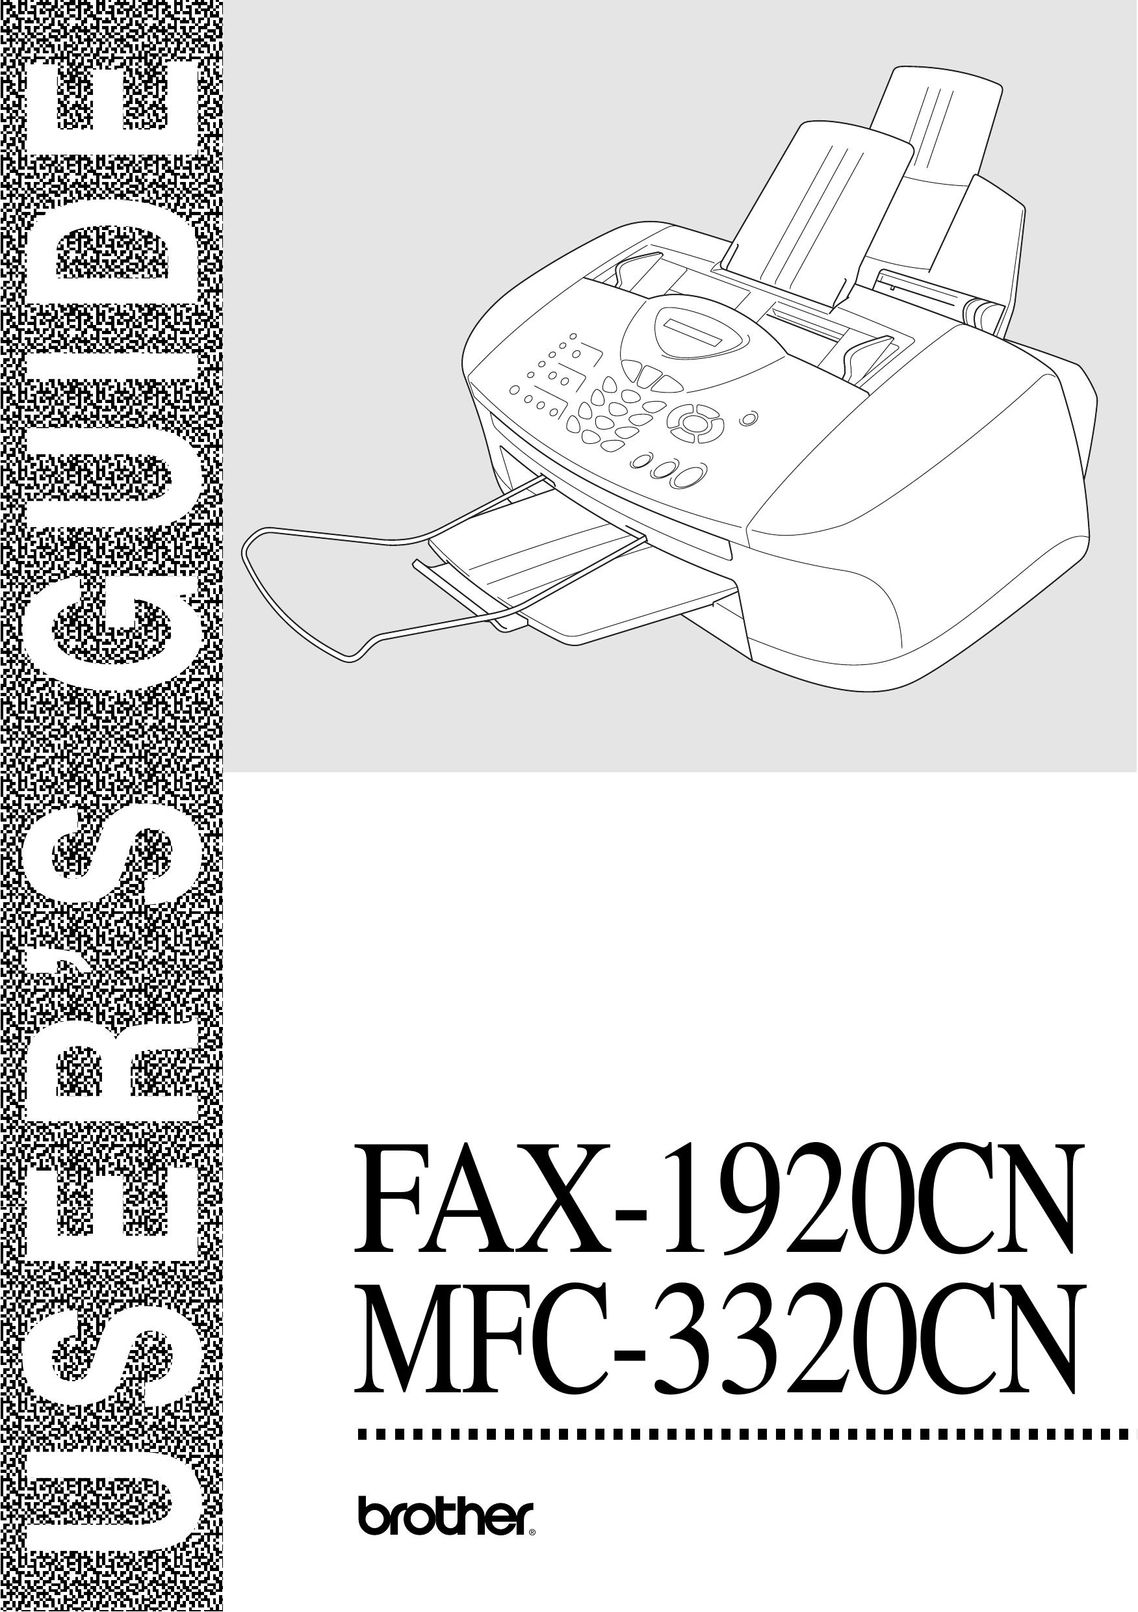 Brother FAX 1920CN Fax Machine User Manual